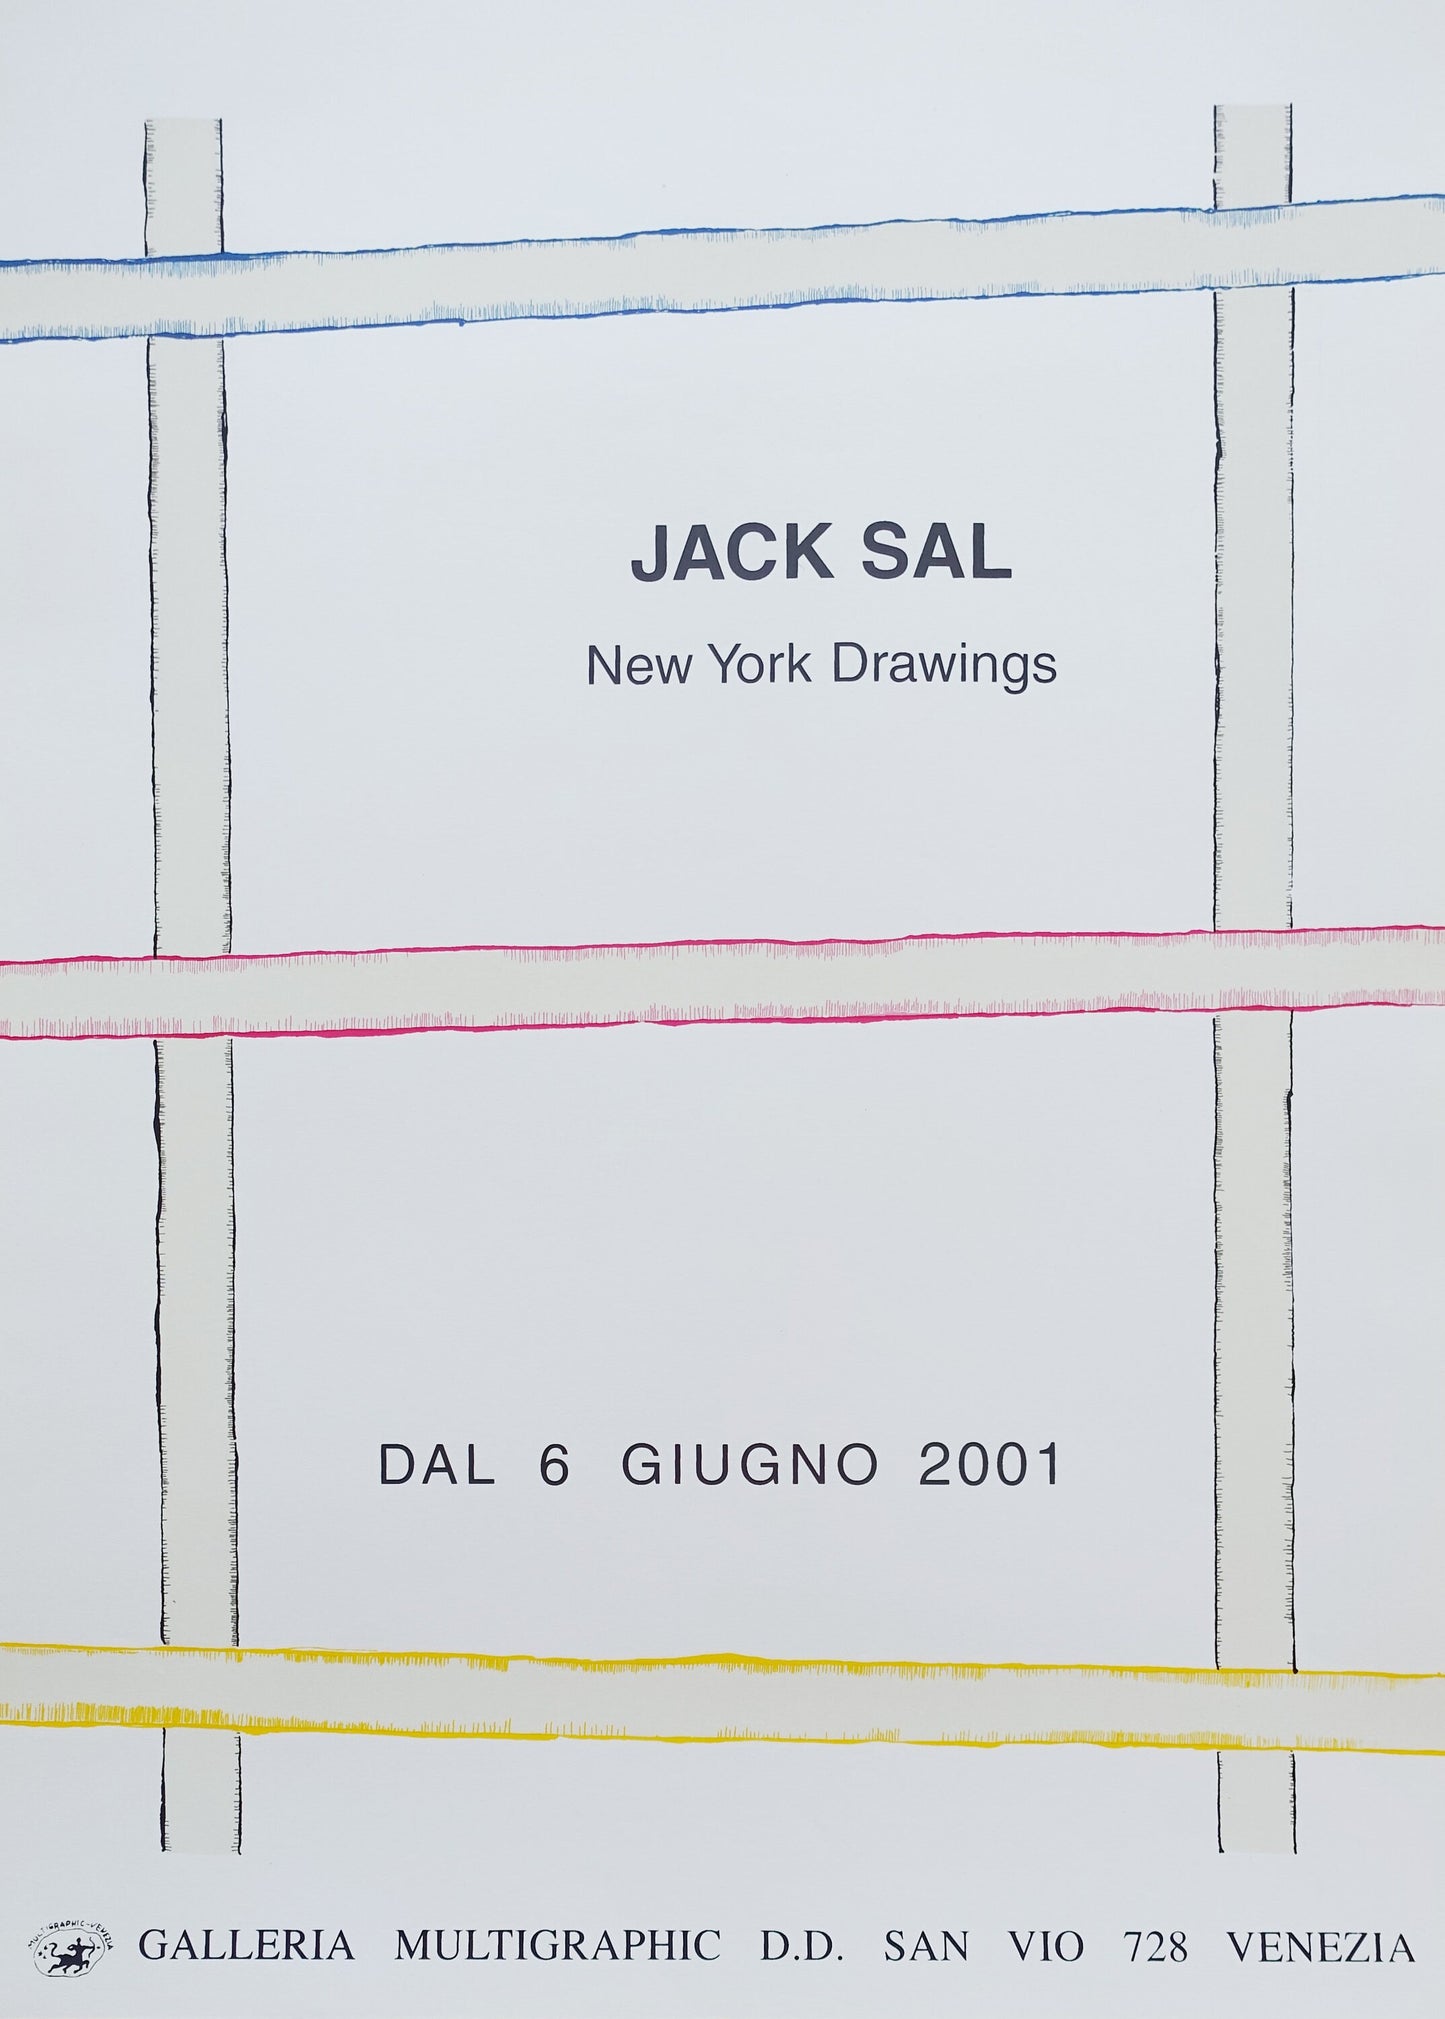 2001 Jack Sal New York Drawings Exhibition Poster - Original Vintage Poster